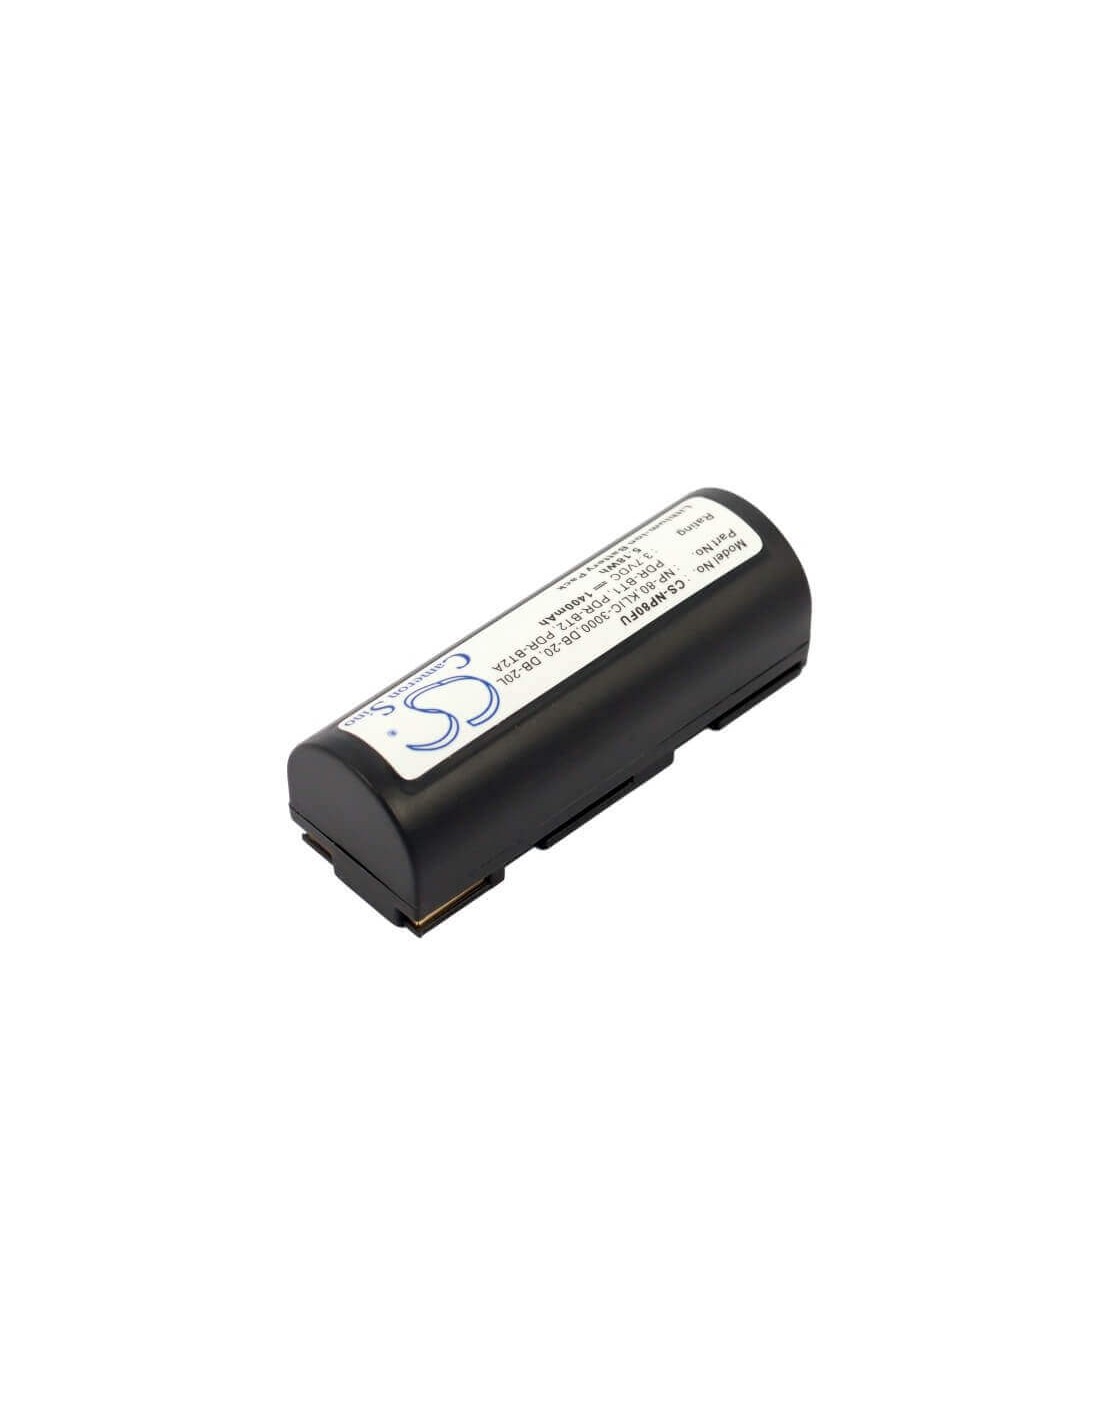 Battery for Mitsubishi Microelite 3300 3.7V, 1400mAh - 5.18Wh